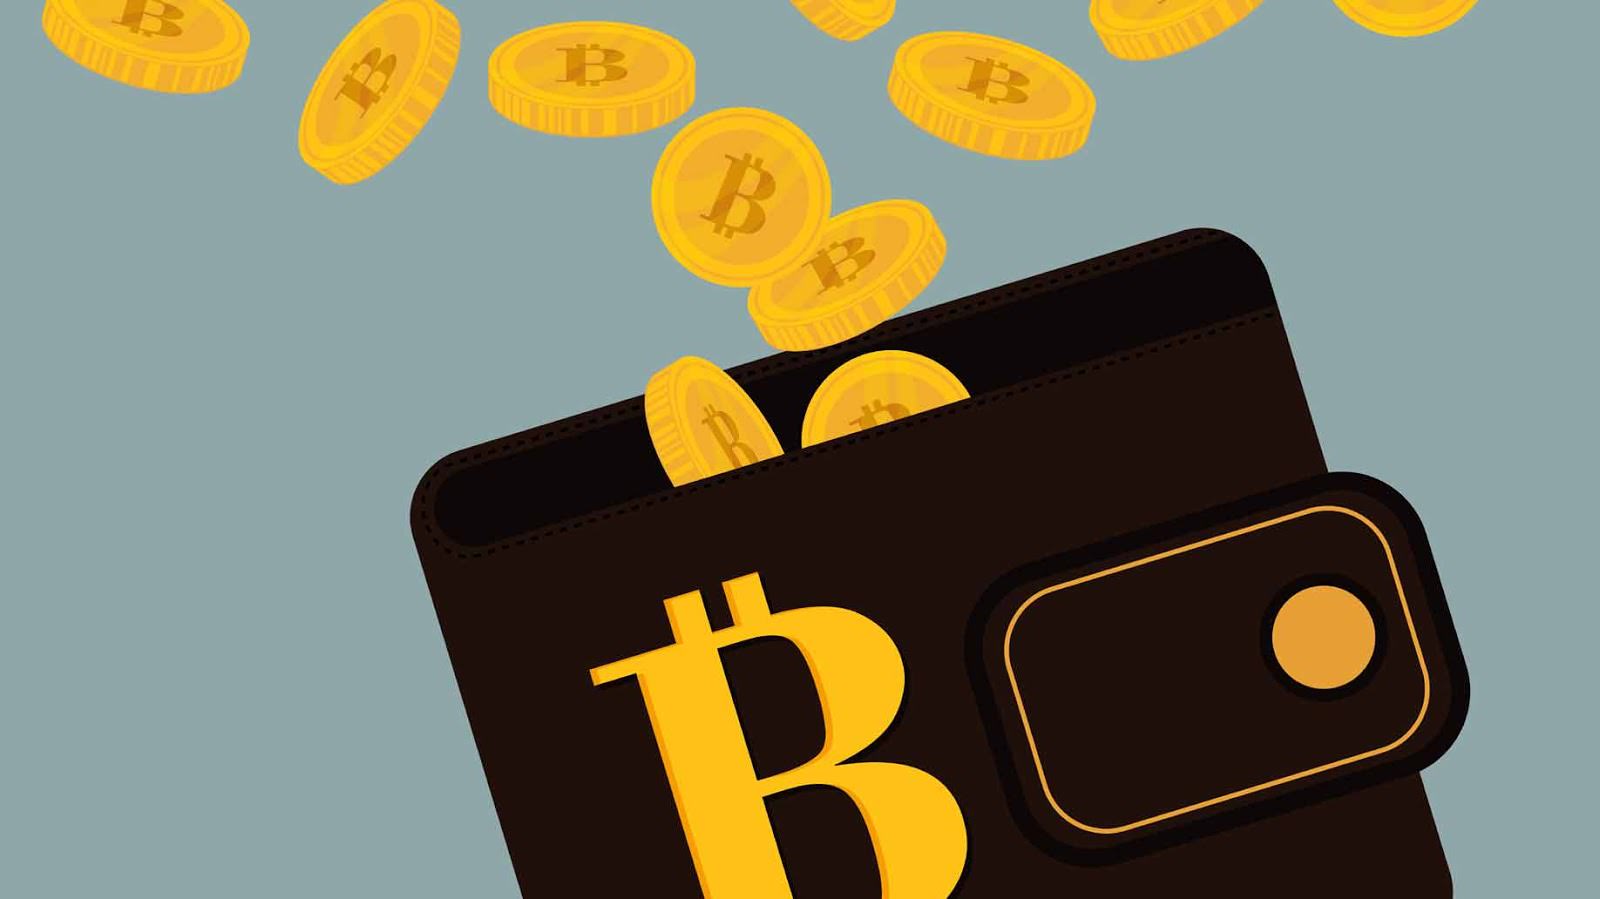 No fee bitcoin wallet paper trading crypto